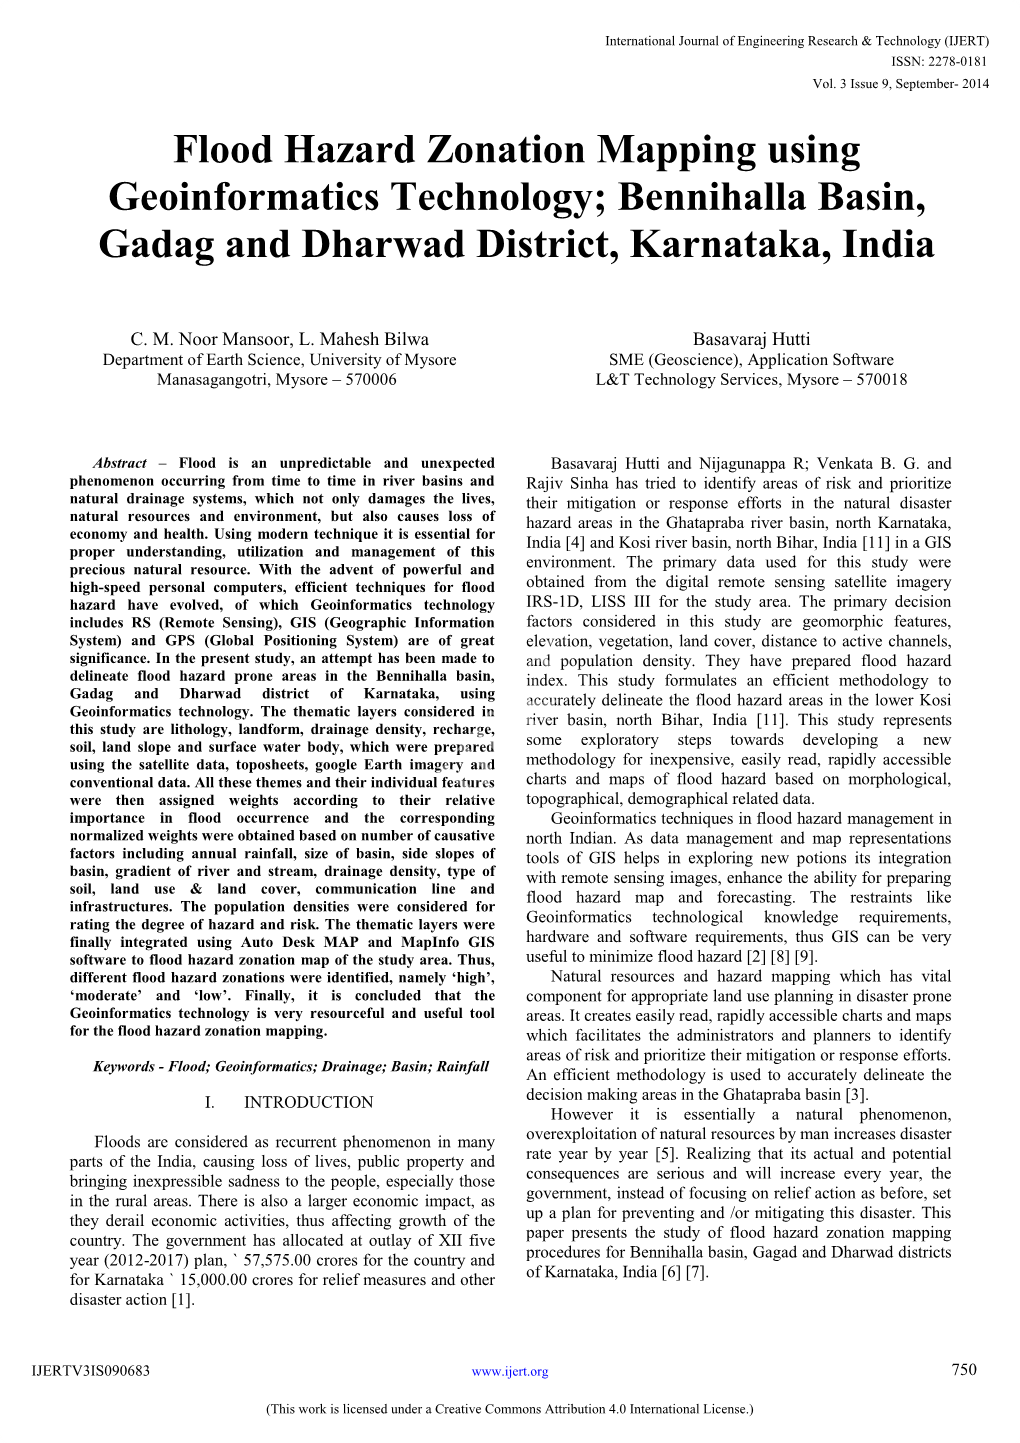 Flood Hazard Zonation Mapping Using Geoinformatics Technology; Bennihalla Basin, Gadag and Dharwad District, Karnataka, India